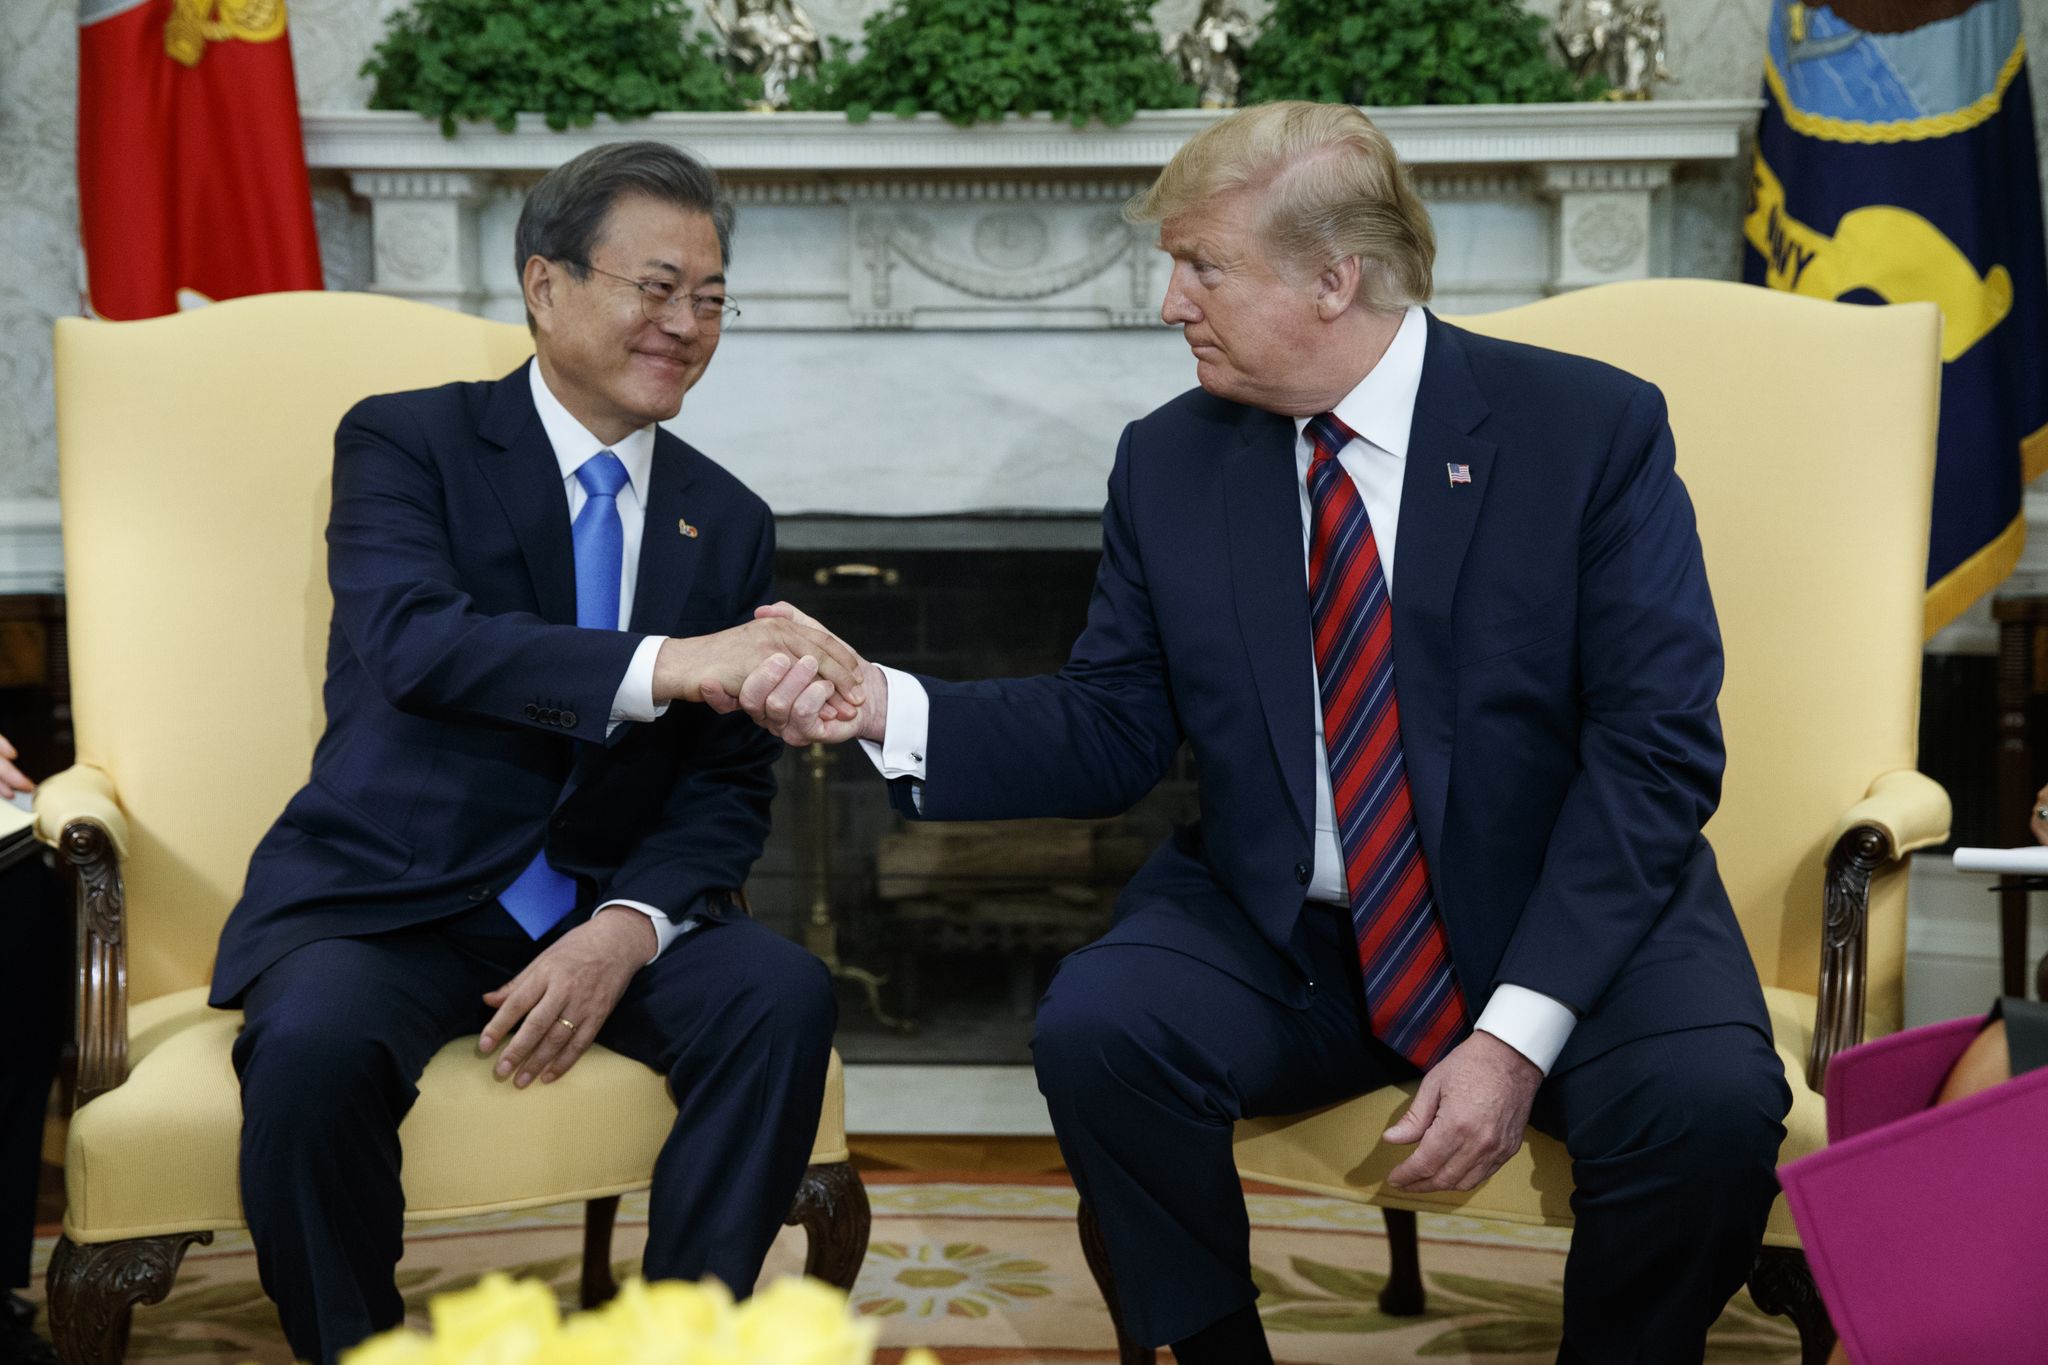 Trump eyes deals with Kim Jong-un to restart North Korea denuclearization talks